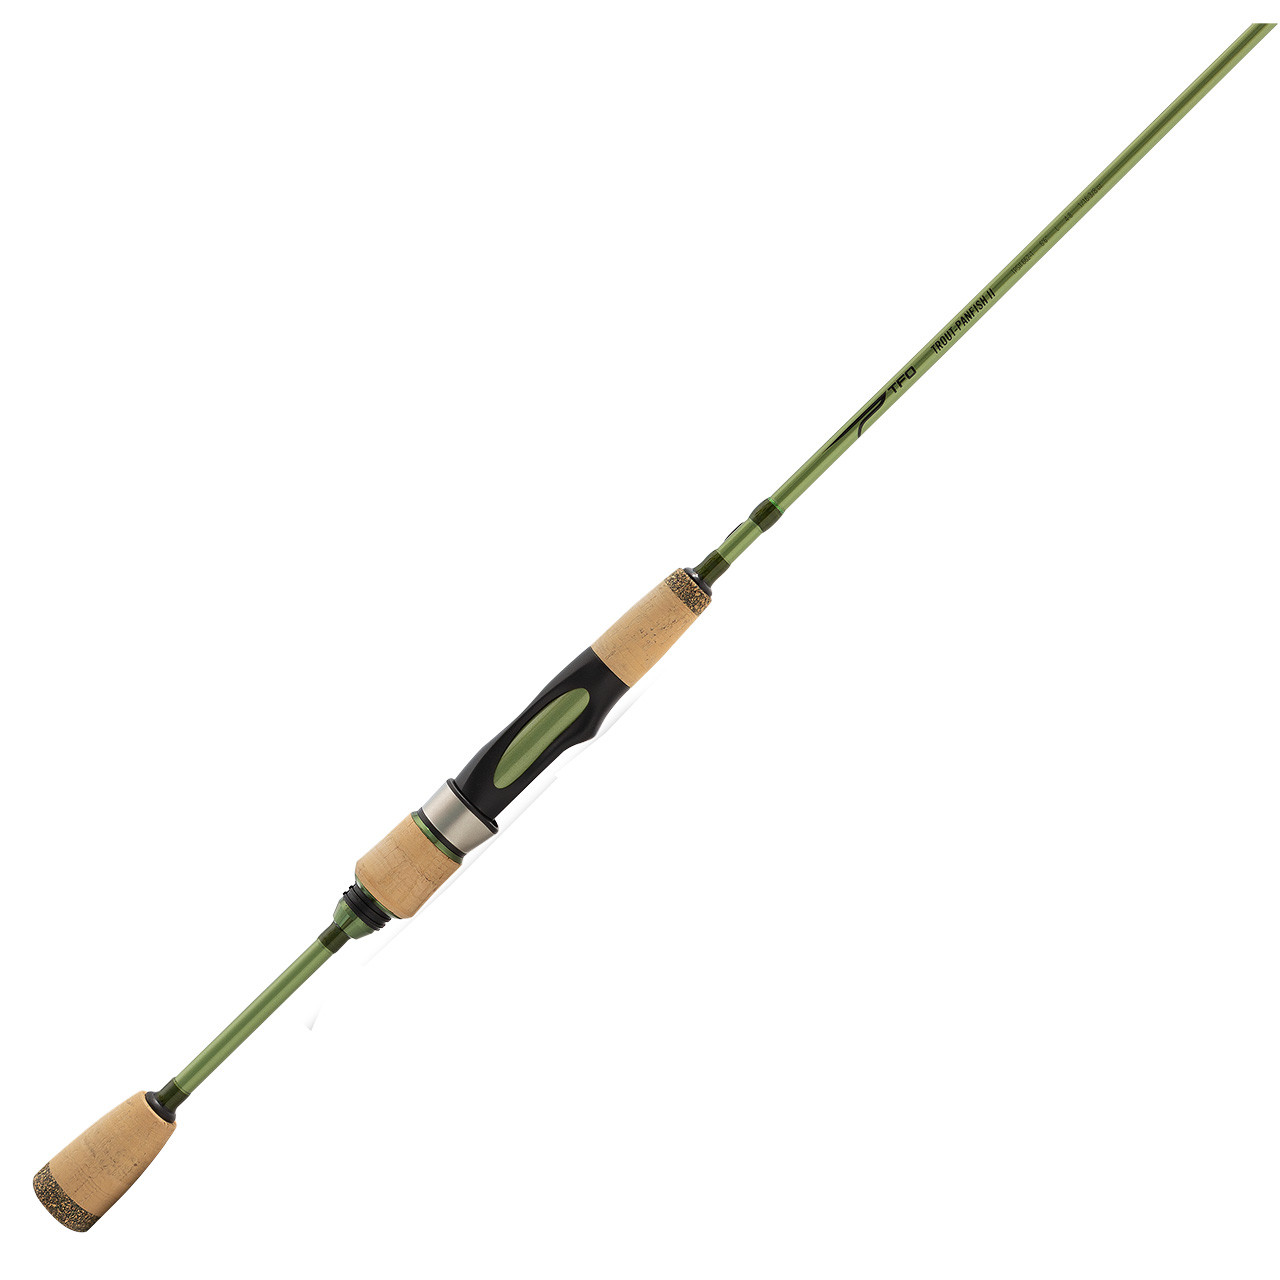 Trout fishing - All fishing equipment: rods, reels, etc - Leurre de la pêche